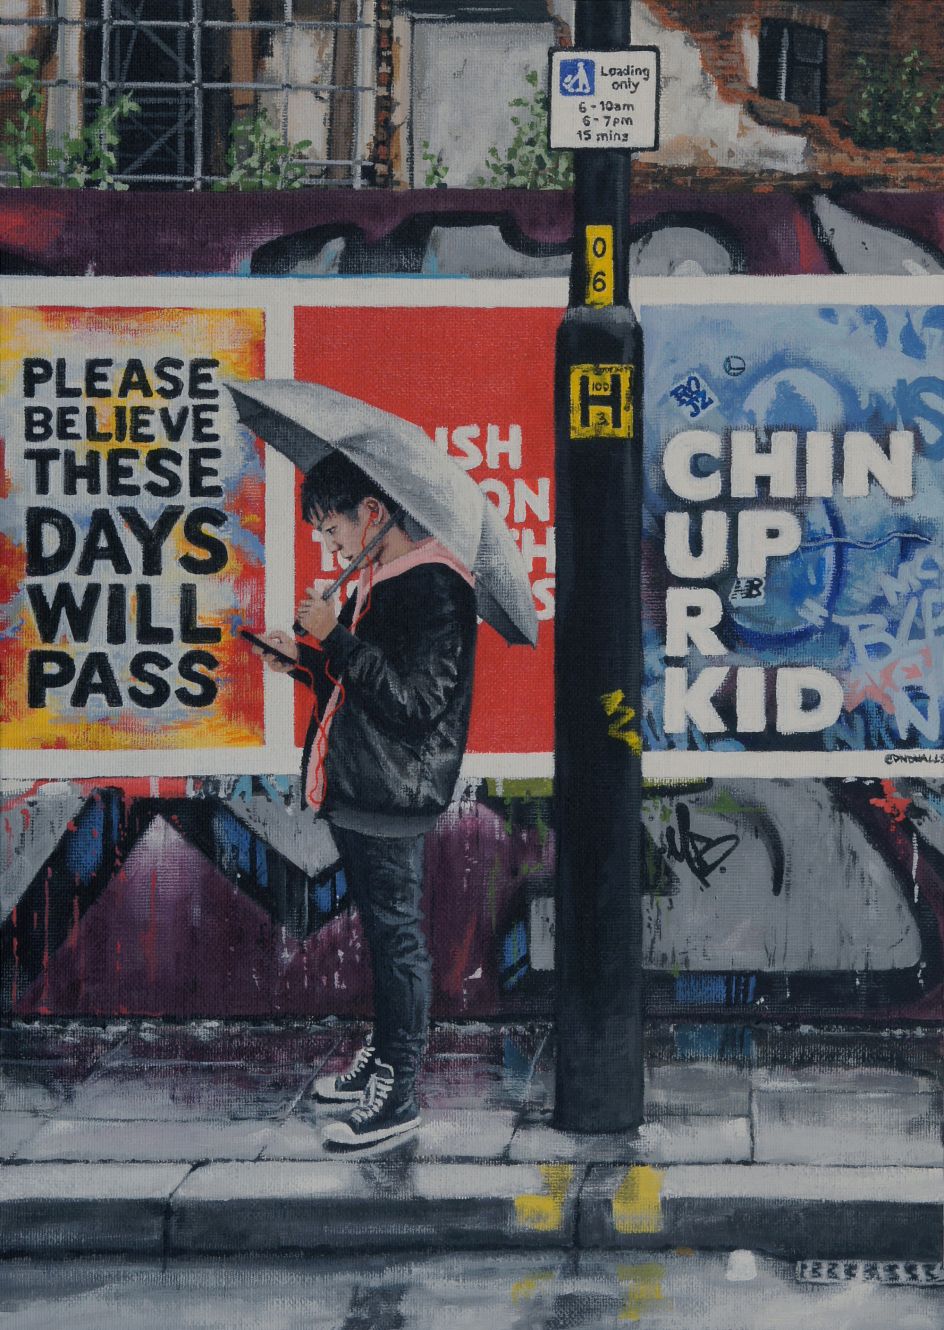 Chin Up R Kid, Northern Quarter, 2020 © Peter Davis